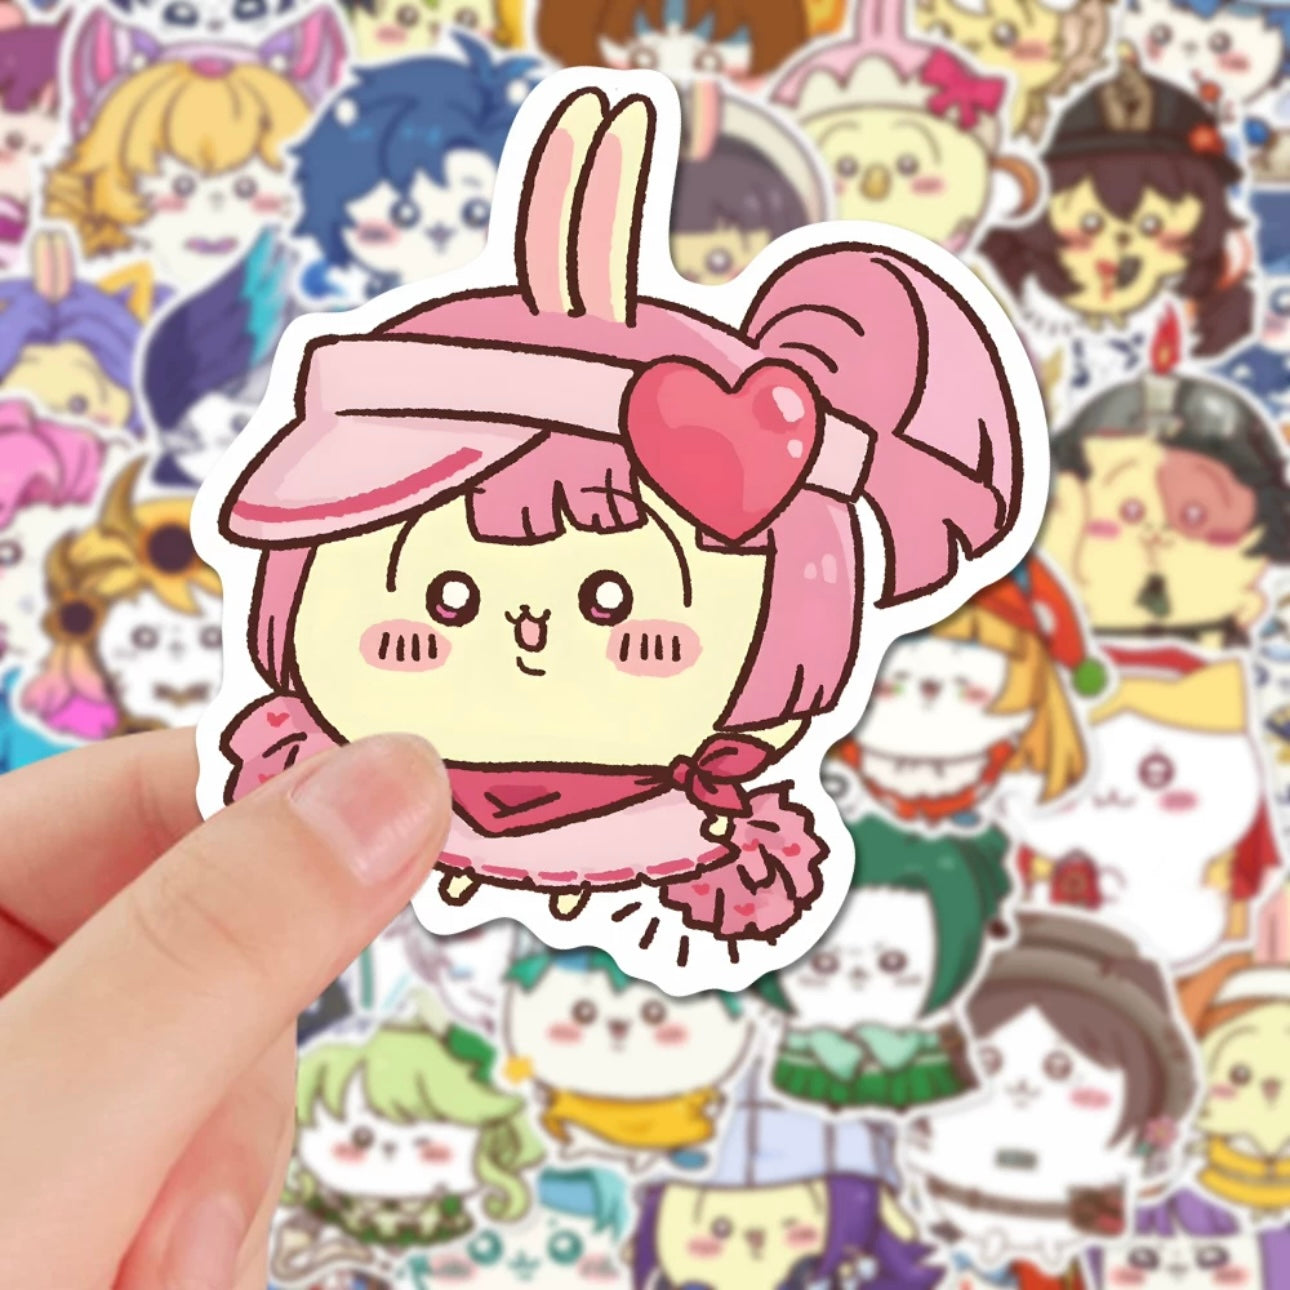 Japanese Cartoon ChiiKawa | Anime Characters Sticker Set - 63 Pieces Phone iPad Schedule Notebook